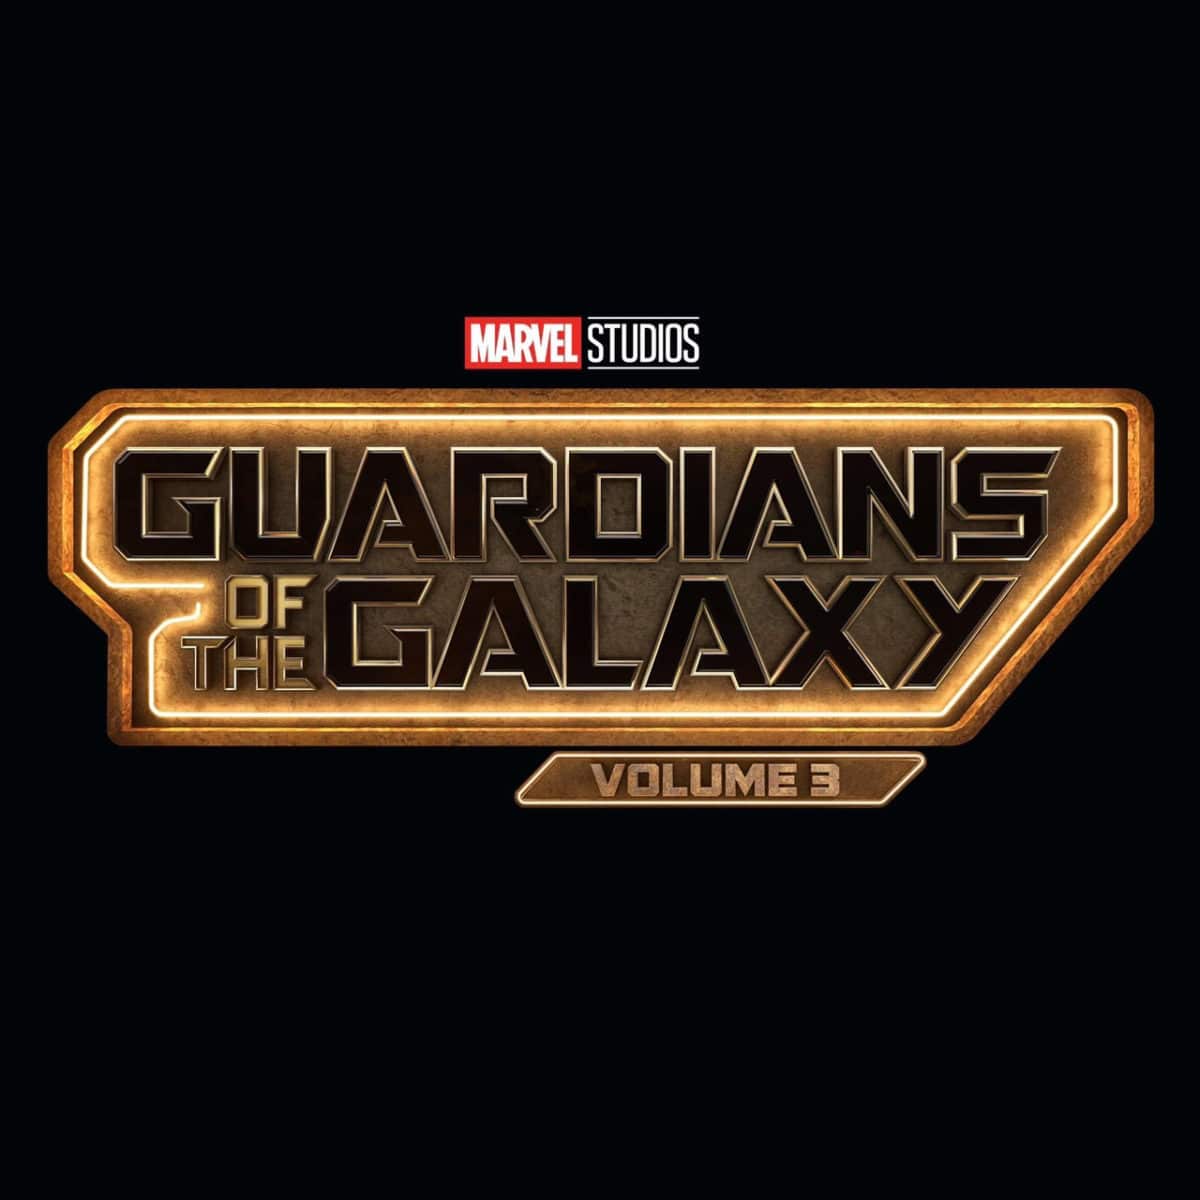 Marvel Studios’ Guardians of the Galaxy Vol. 3